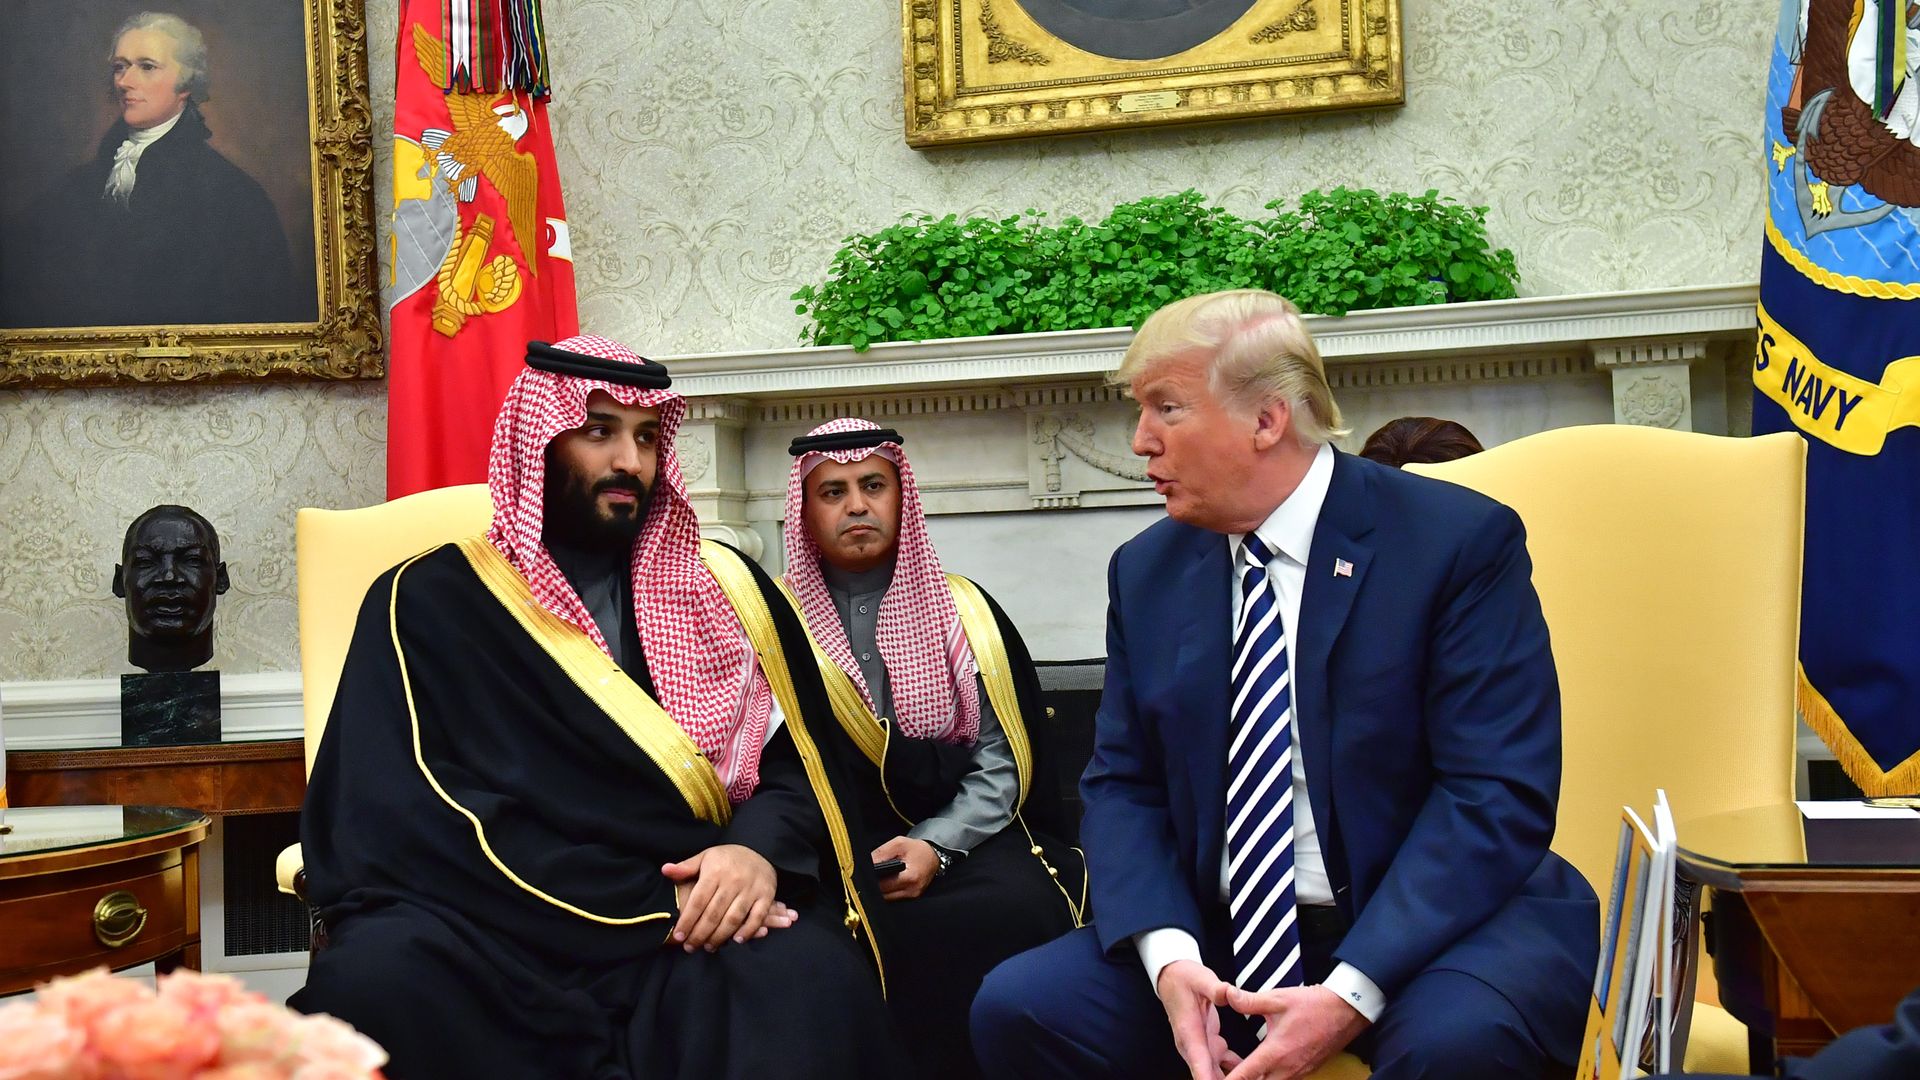 Trump with Saudi crown prince